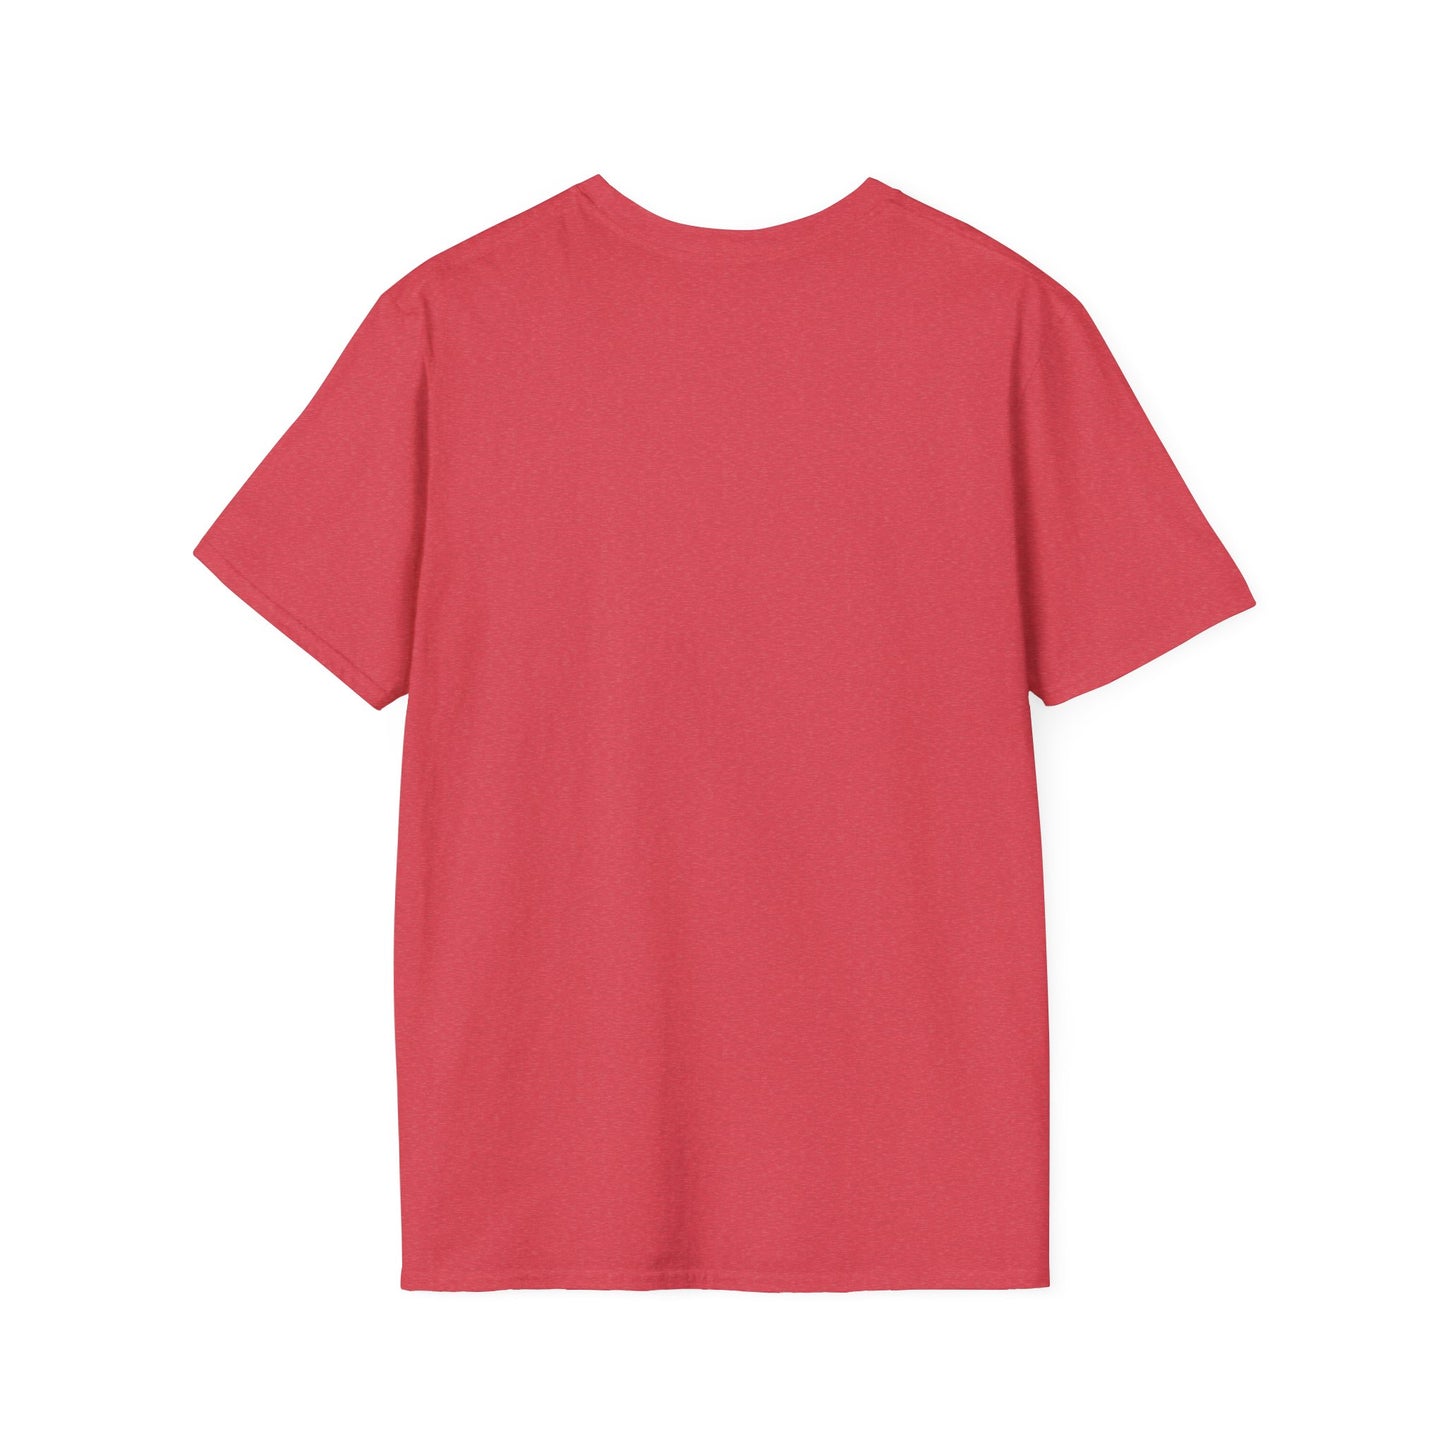 Cool Fur Mama - Unisex Softstyle T-Shirt